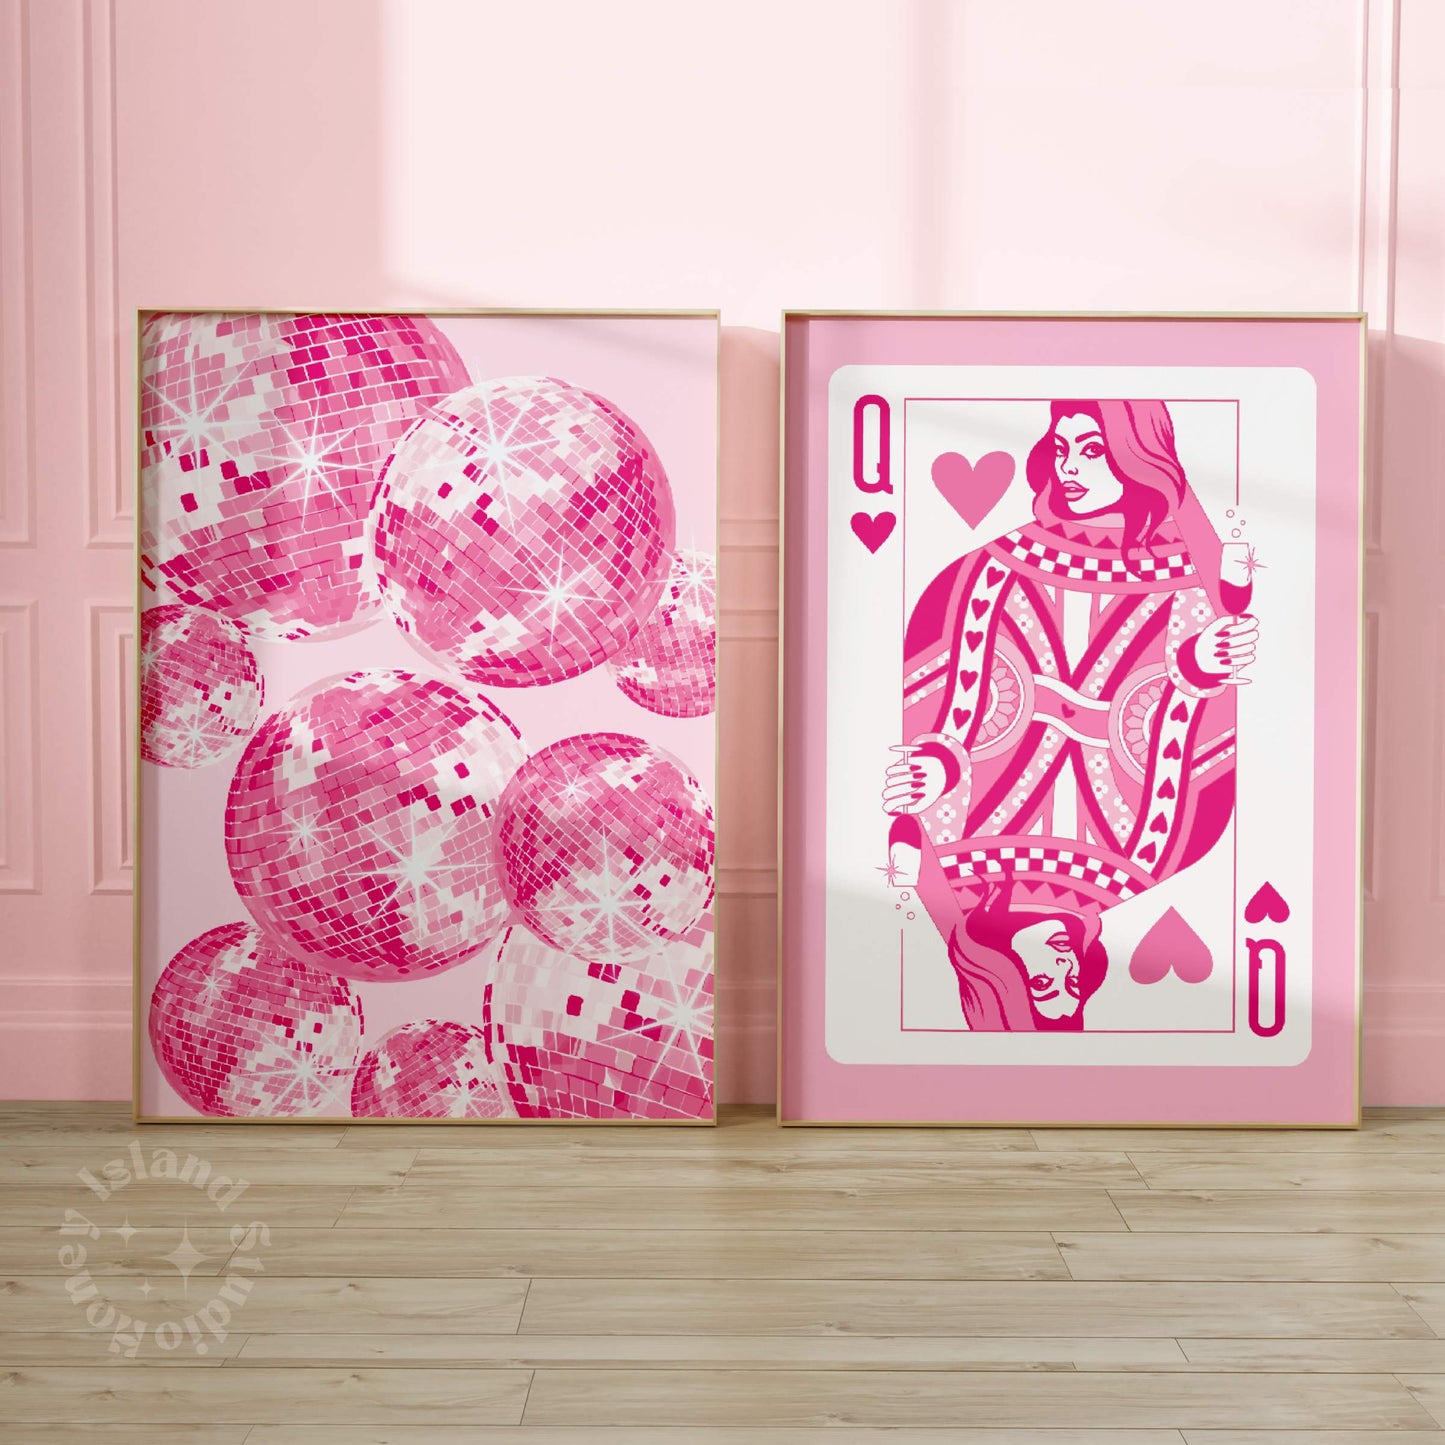 Shining Disco Ball Poster - Pink/White